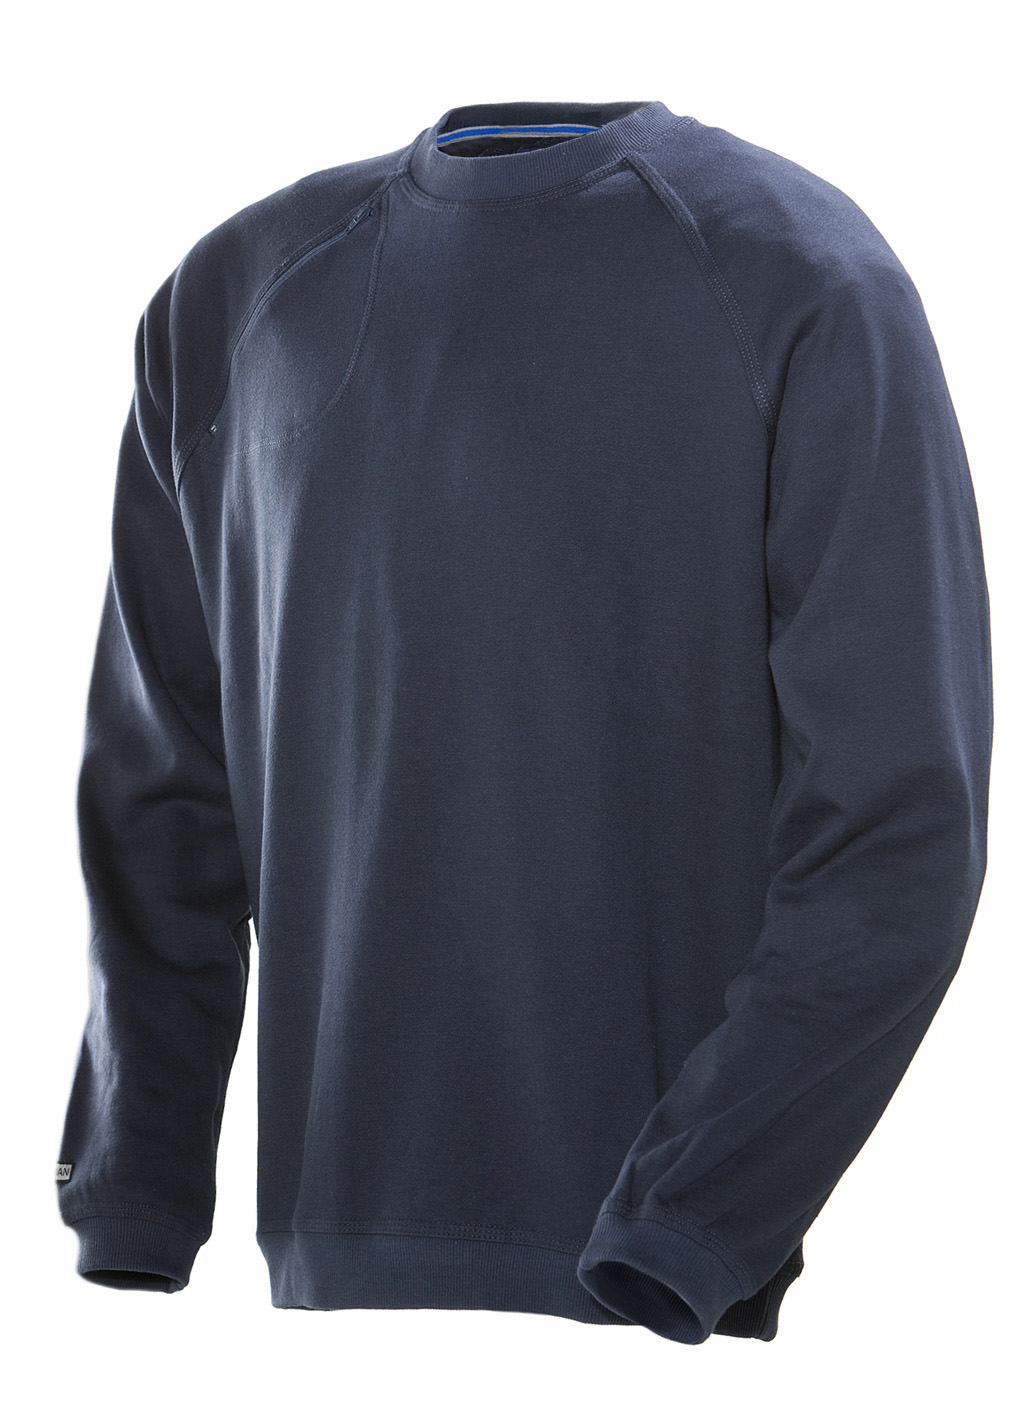 5122 Sweatshirt S bleu marine